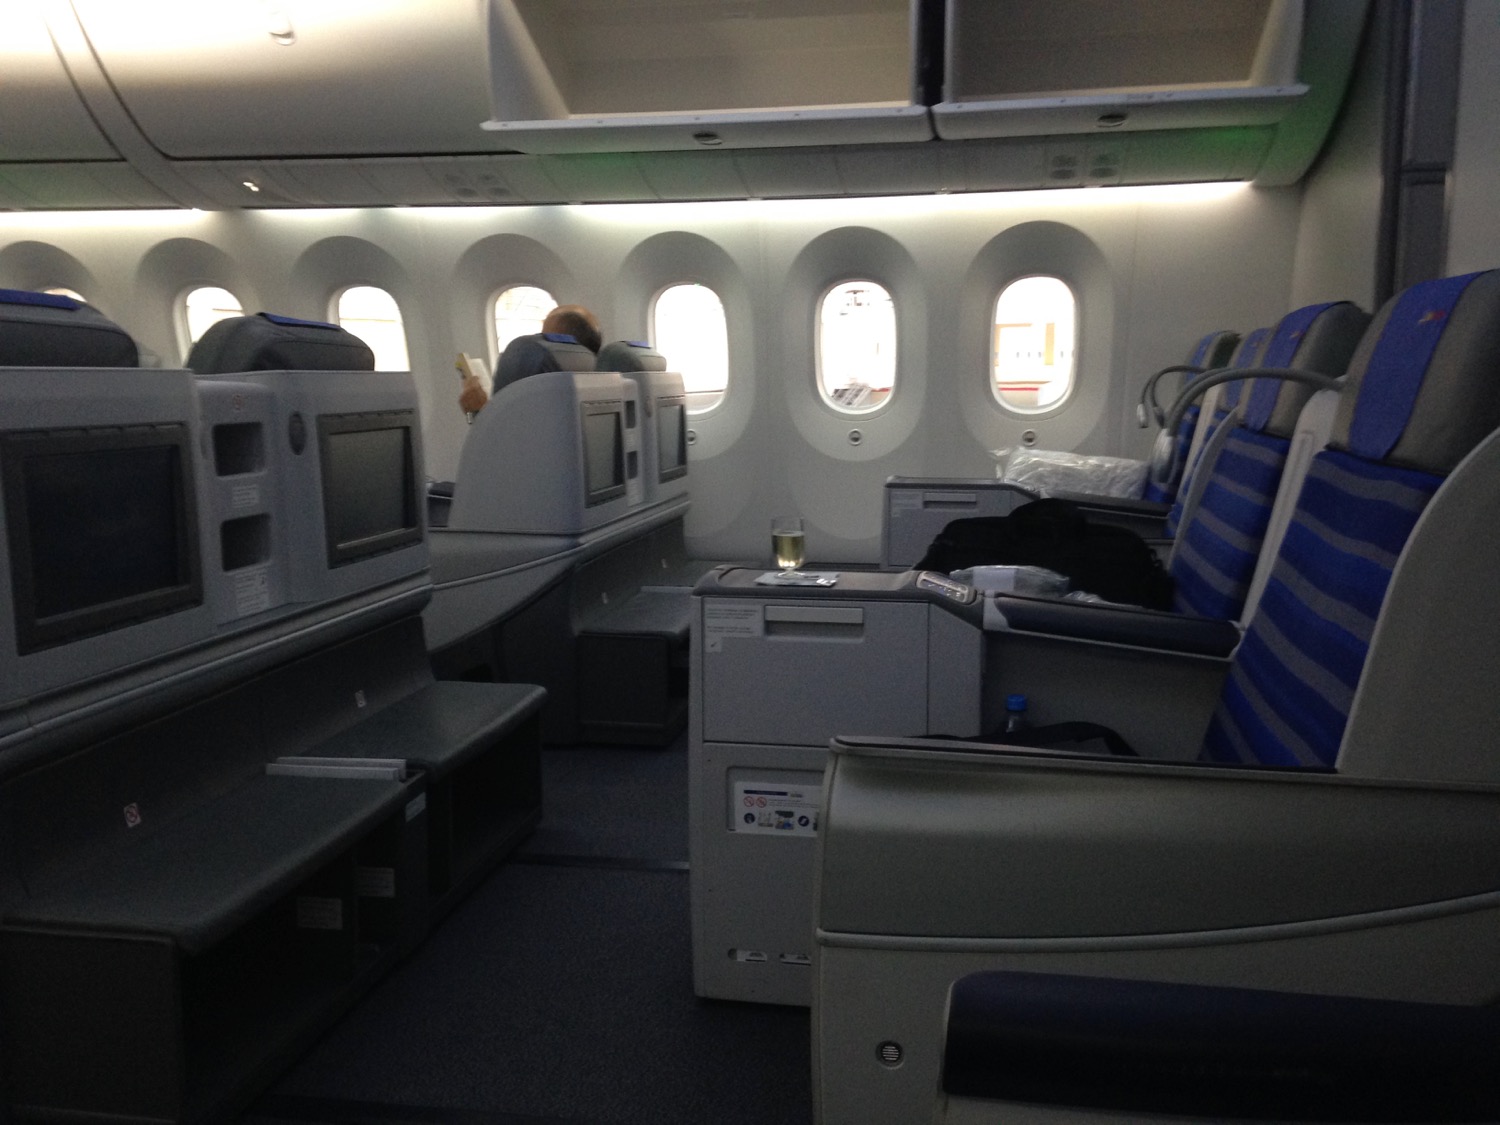 LOT Polish 787 Business Class Review - 10